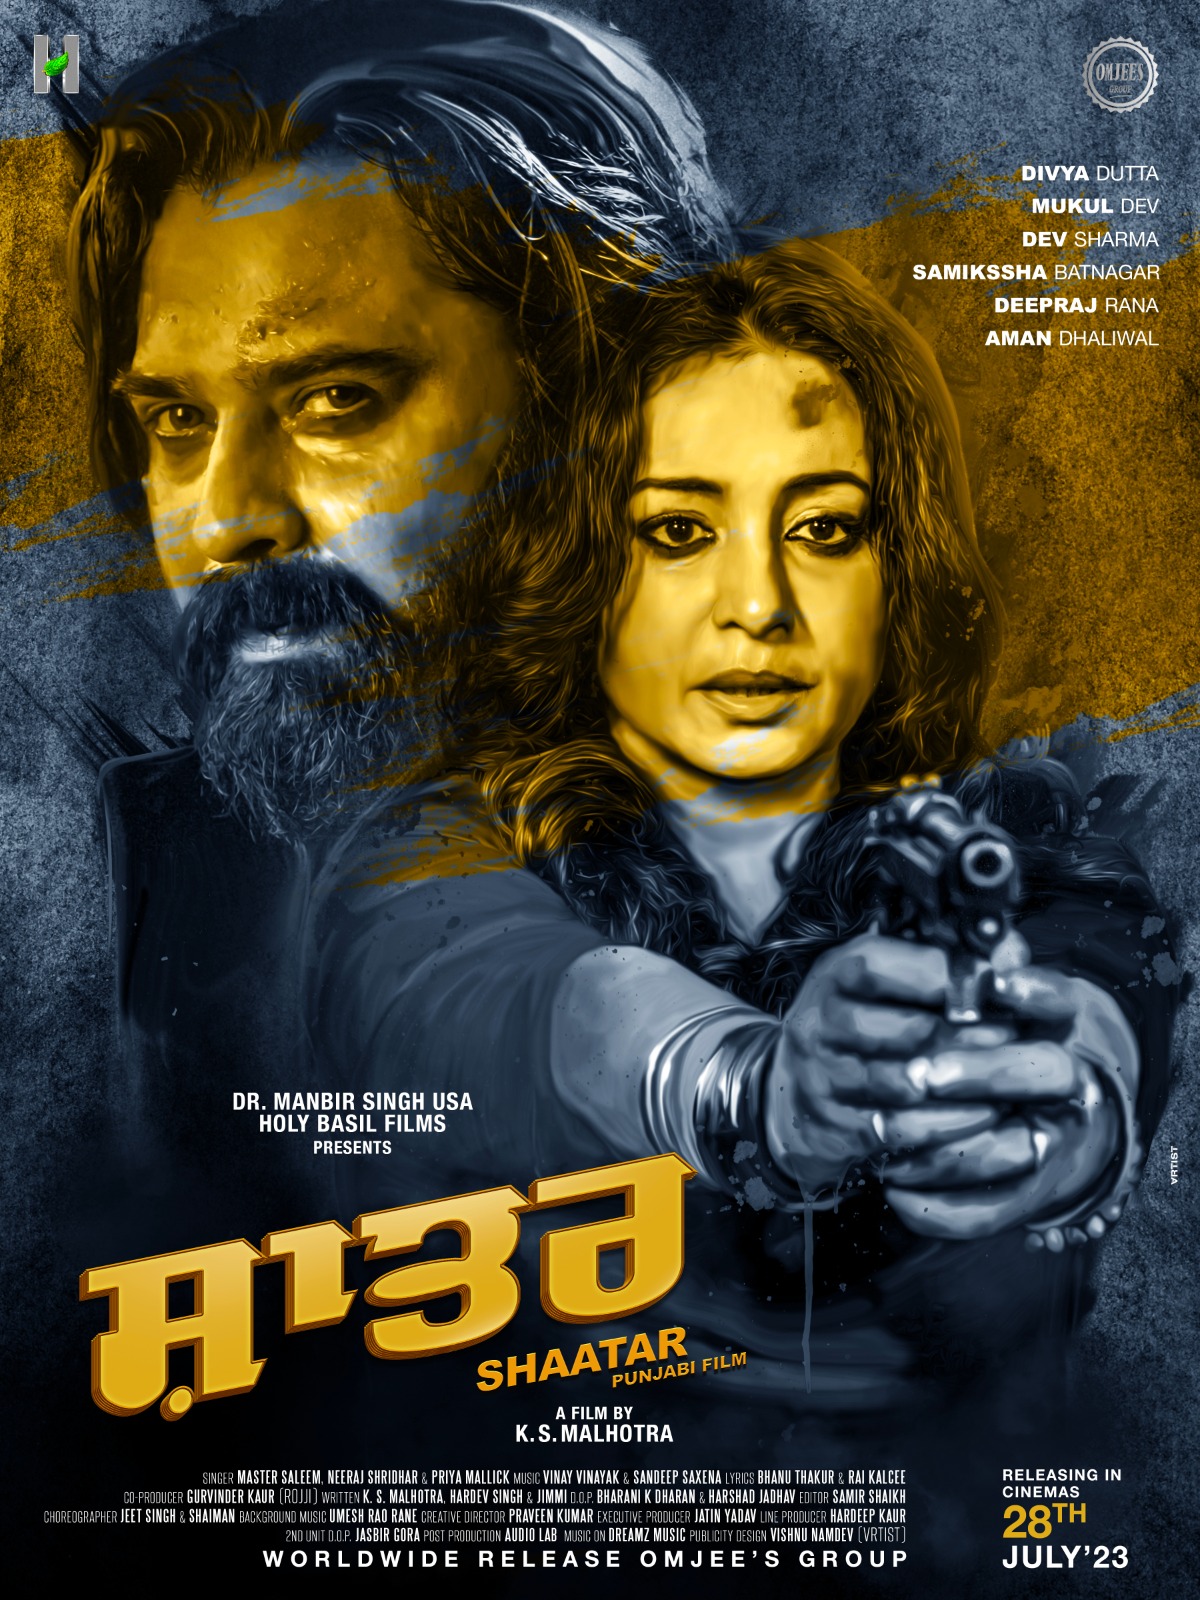 Shaatar movie poster featuring Mukul Dev and Divya Dutta